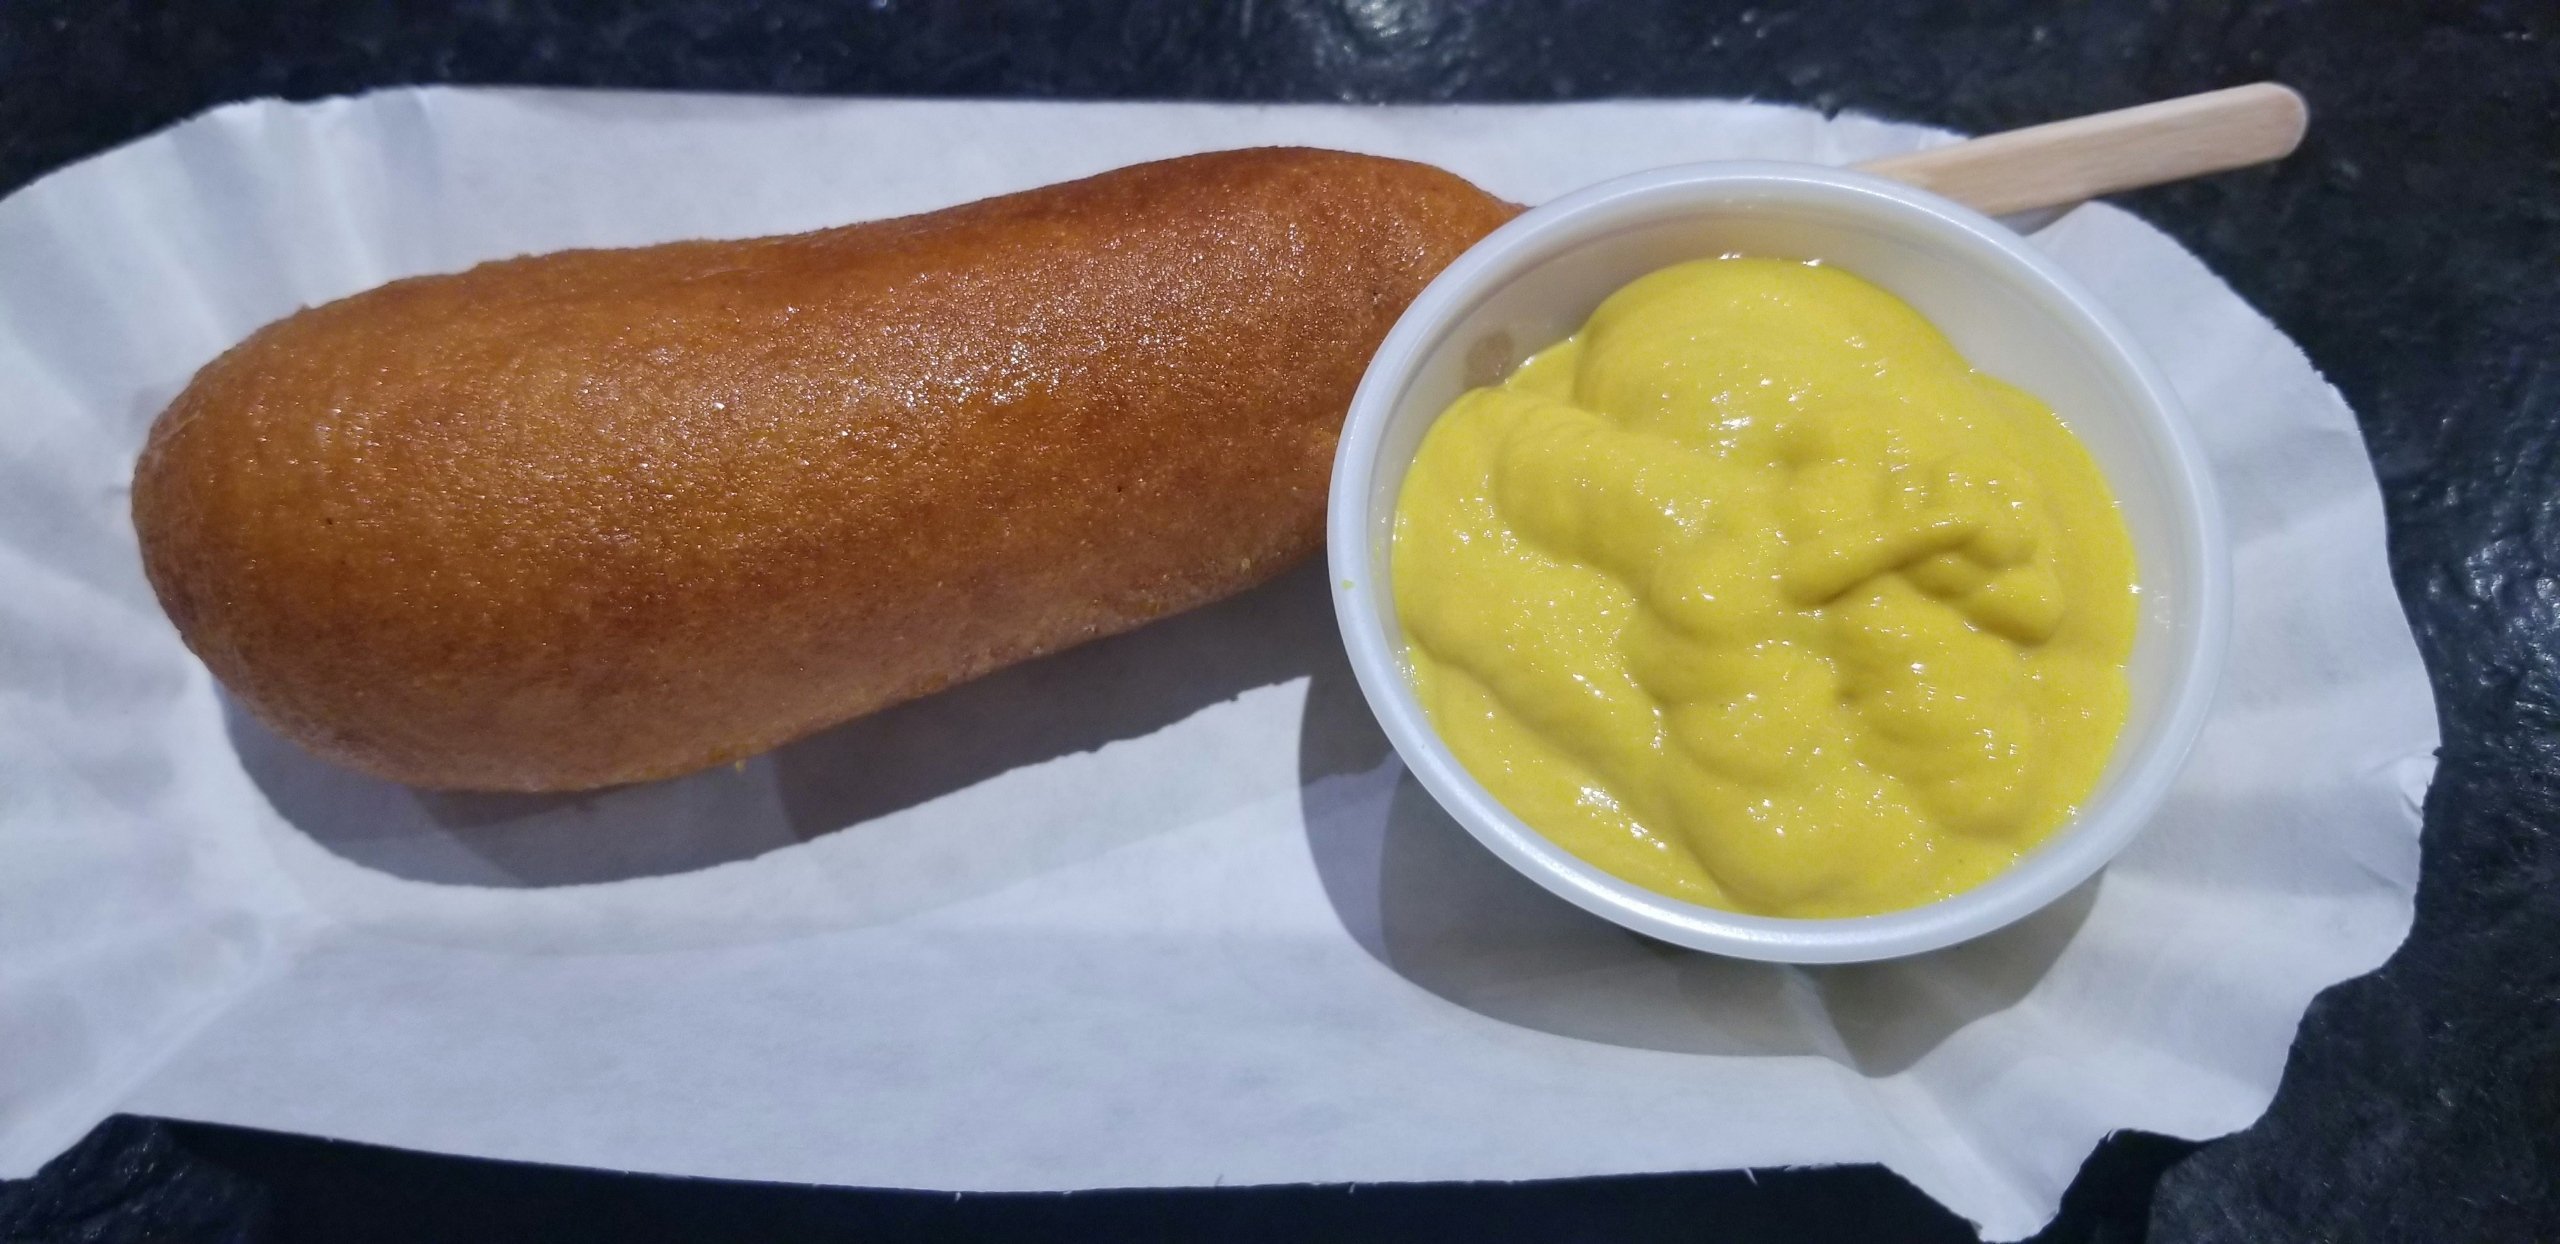 Corn dog with mustard